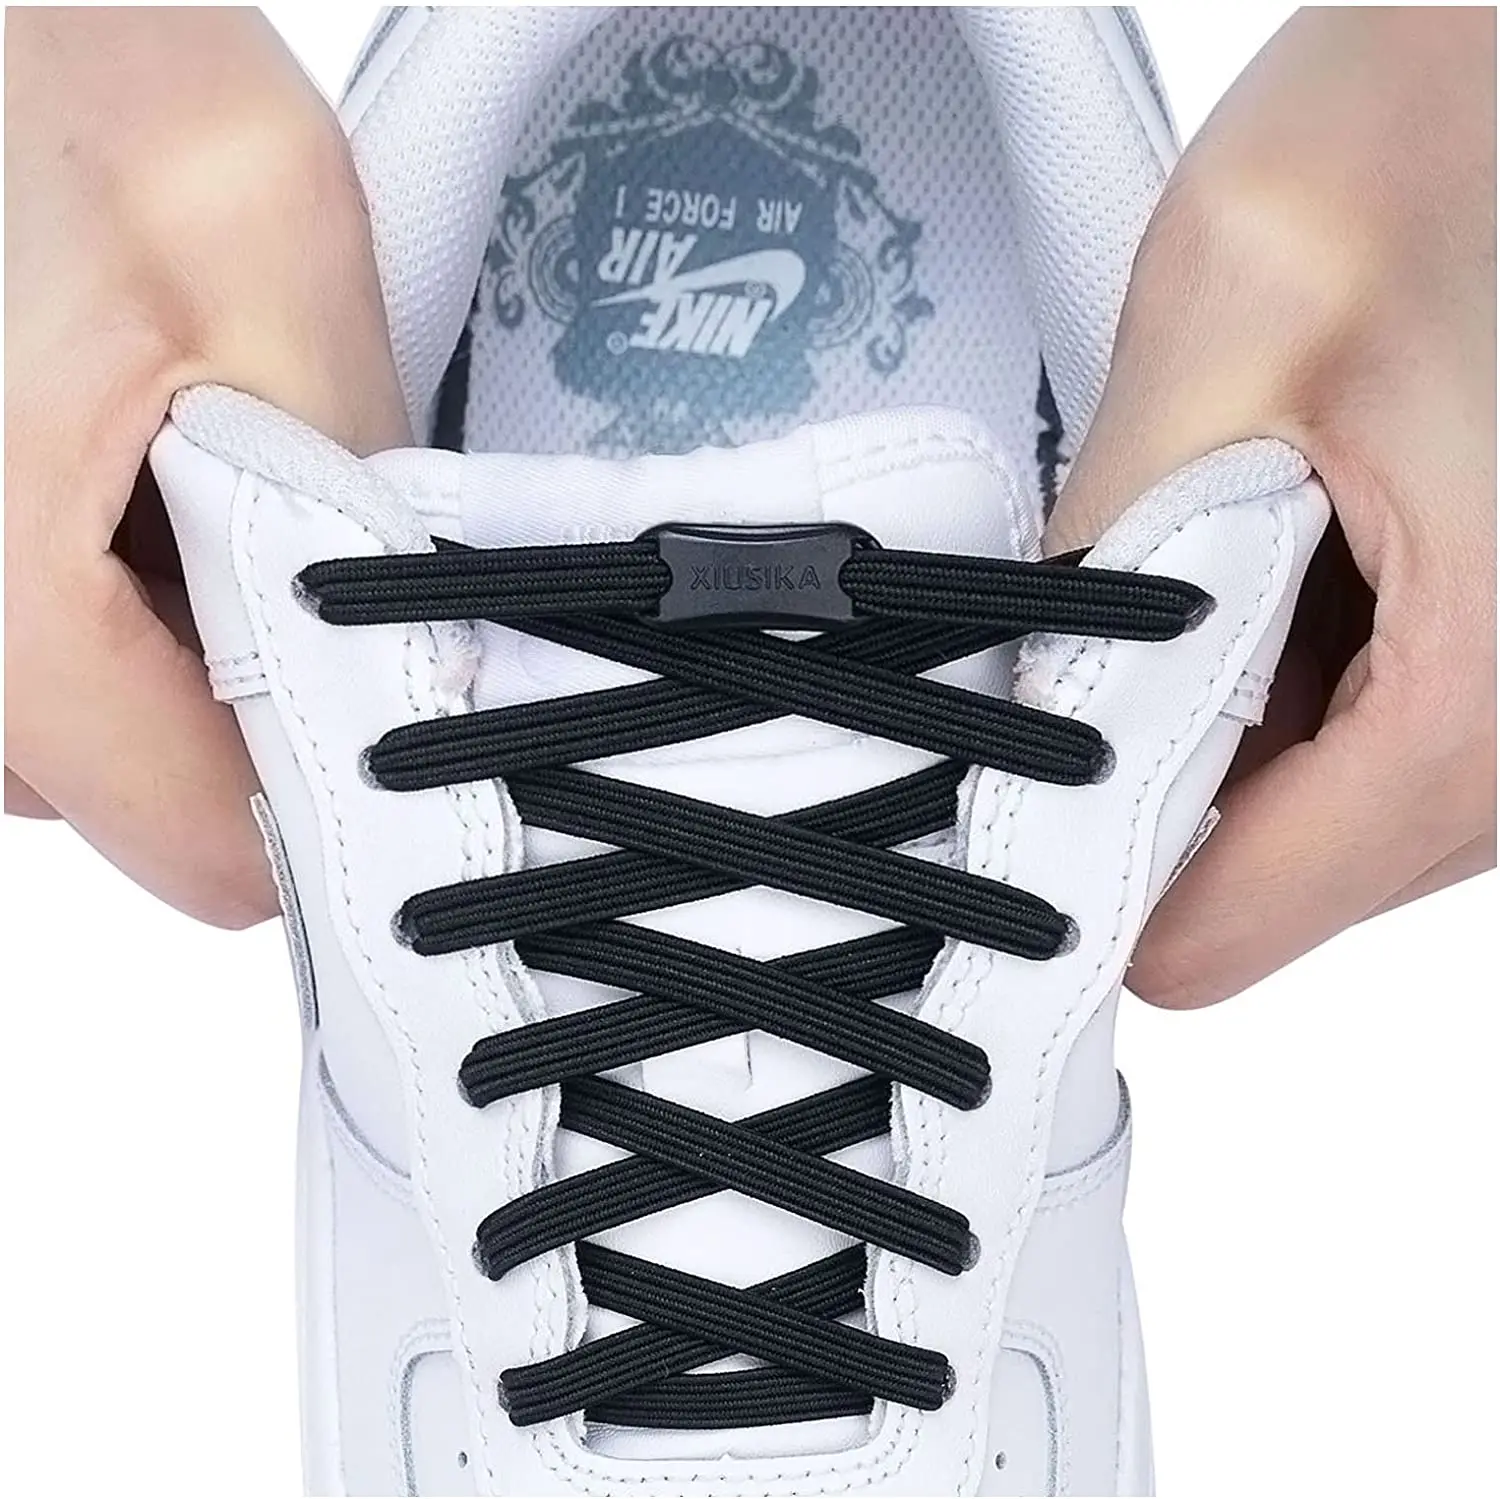 Nihlssen 12 Pcs/Pack Unique Sickle-Shaped Elastic No Tie Silicone Shoelaces for Sneakers Kids Adults Disposable Novelty Fit Strap Laces 